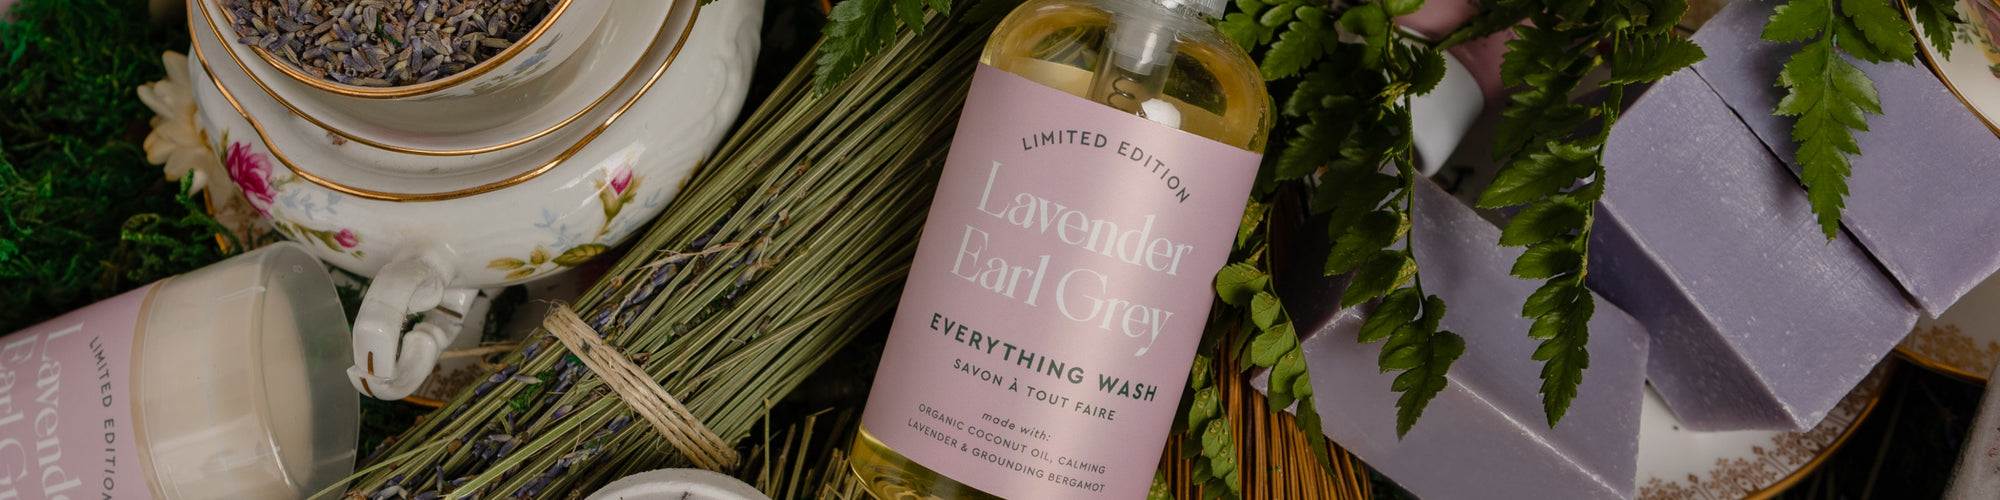 Lavender Earl Grey